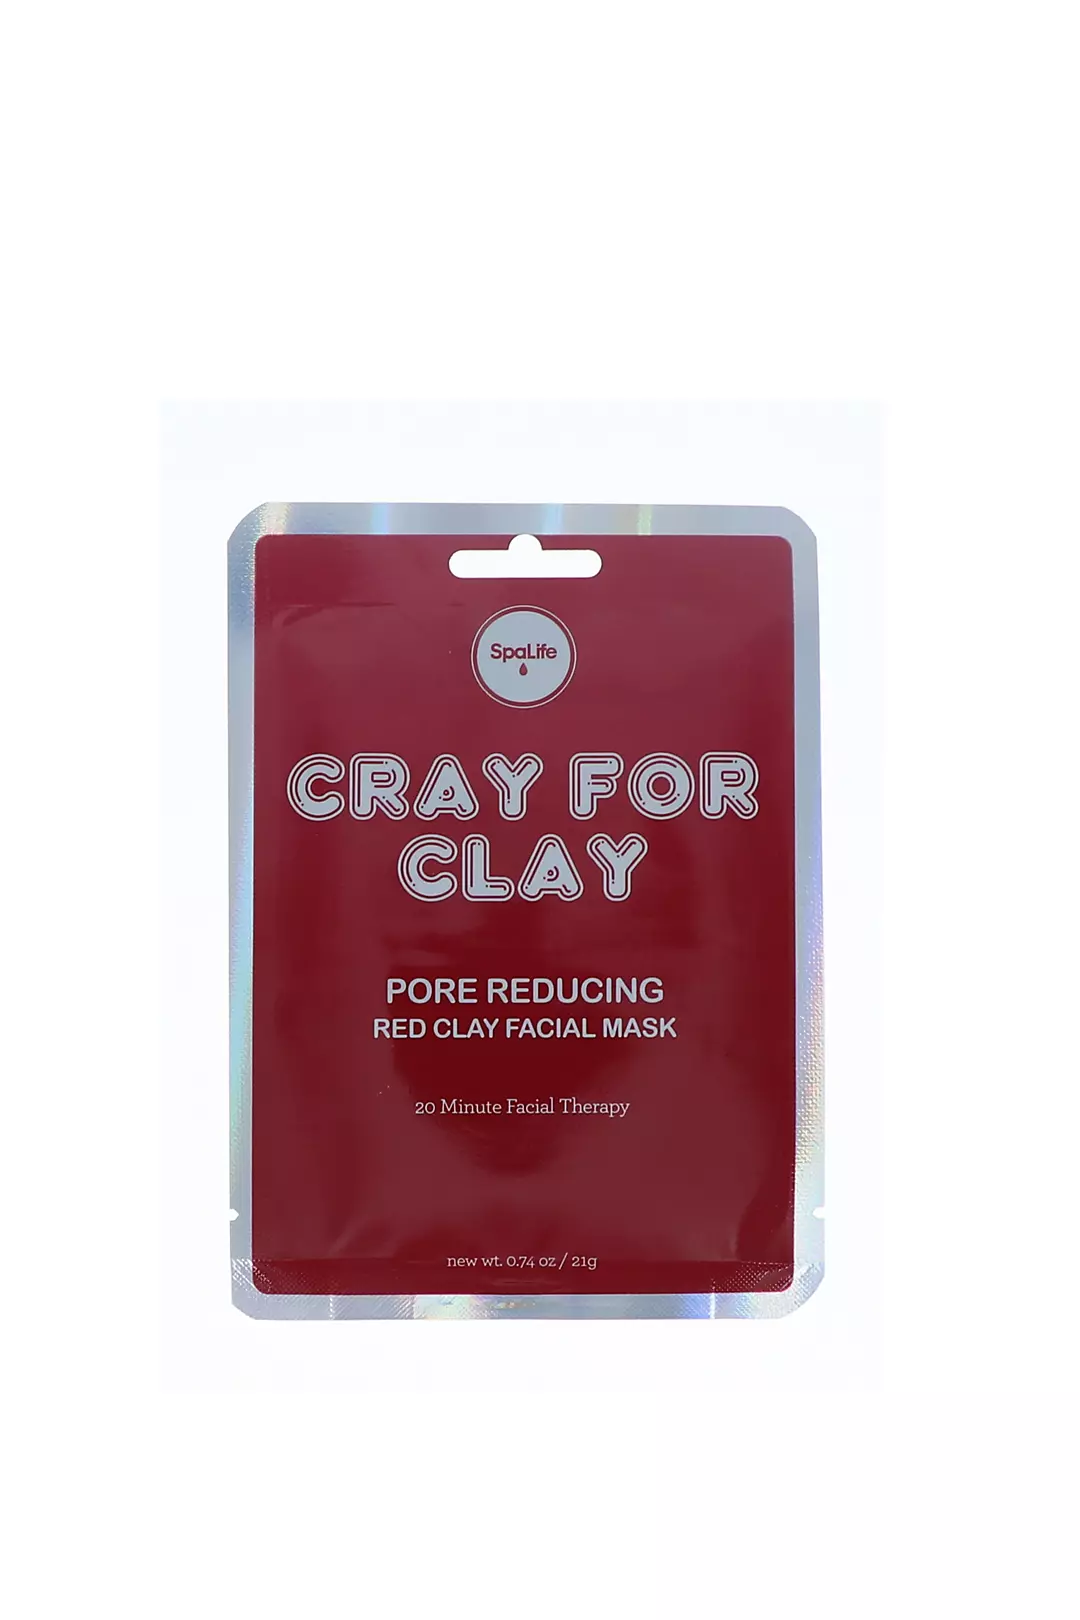 Cray for Clay Pore Reducing Facial Sheet Mask Image